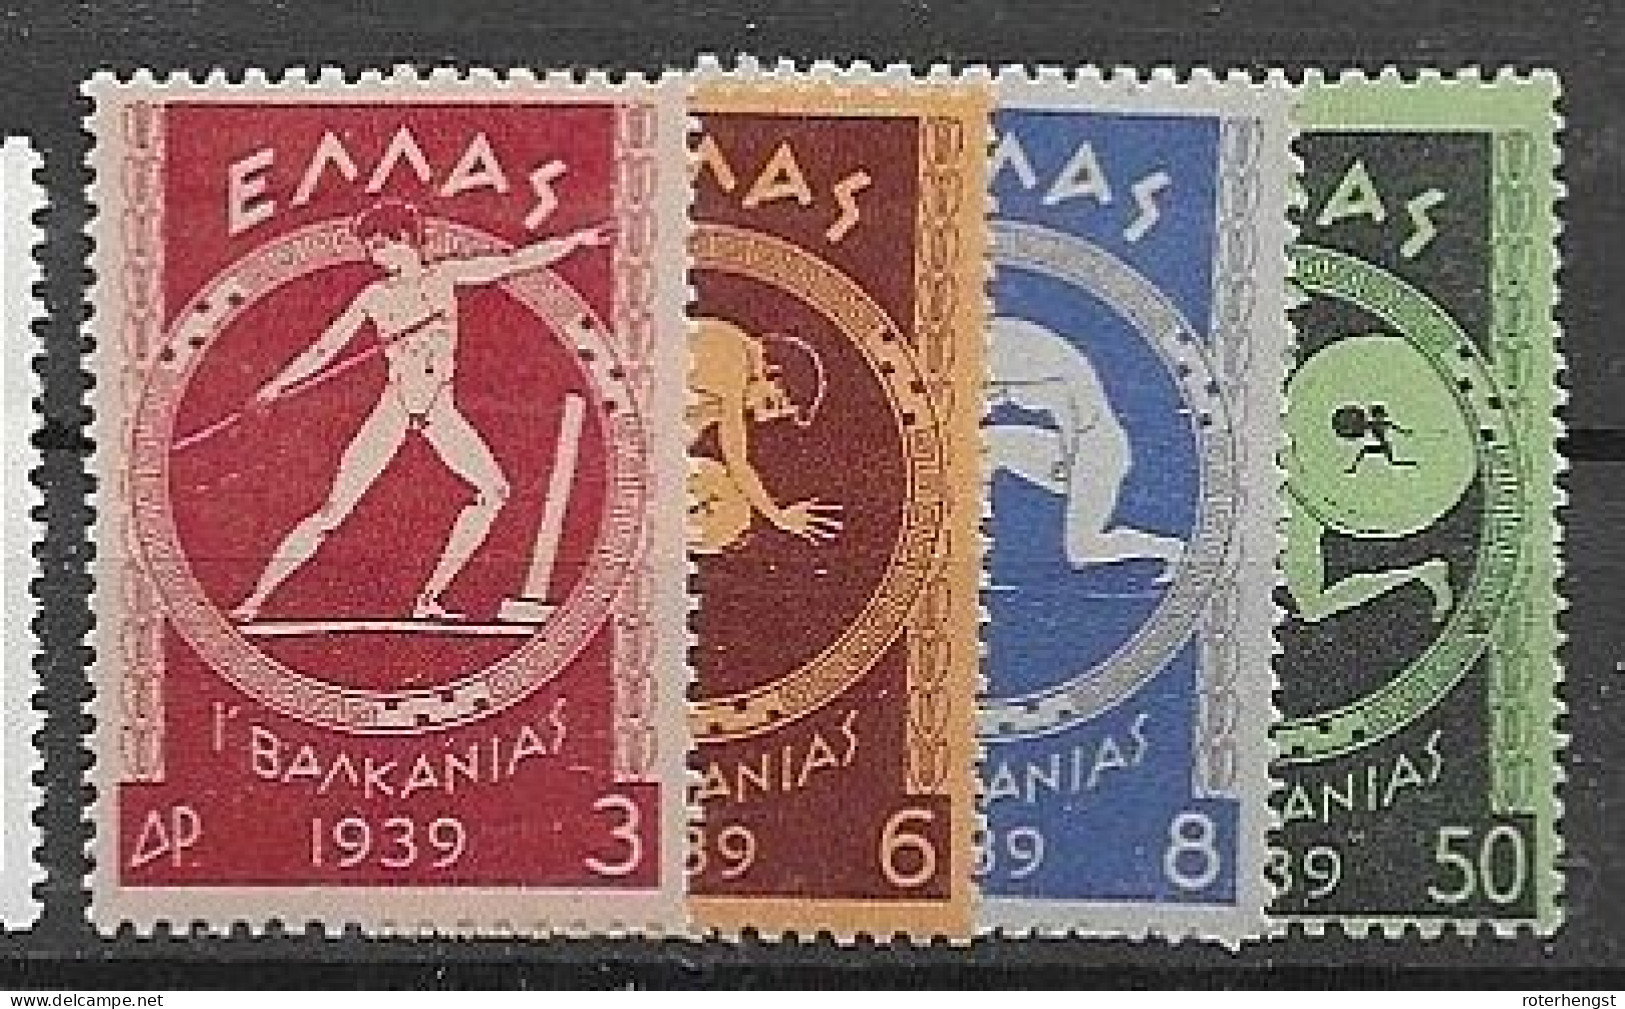 Greece 1933 Mh * (21 Euros) Complete Set - Neufs